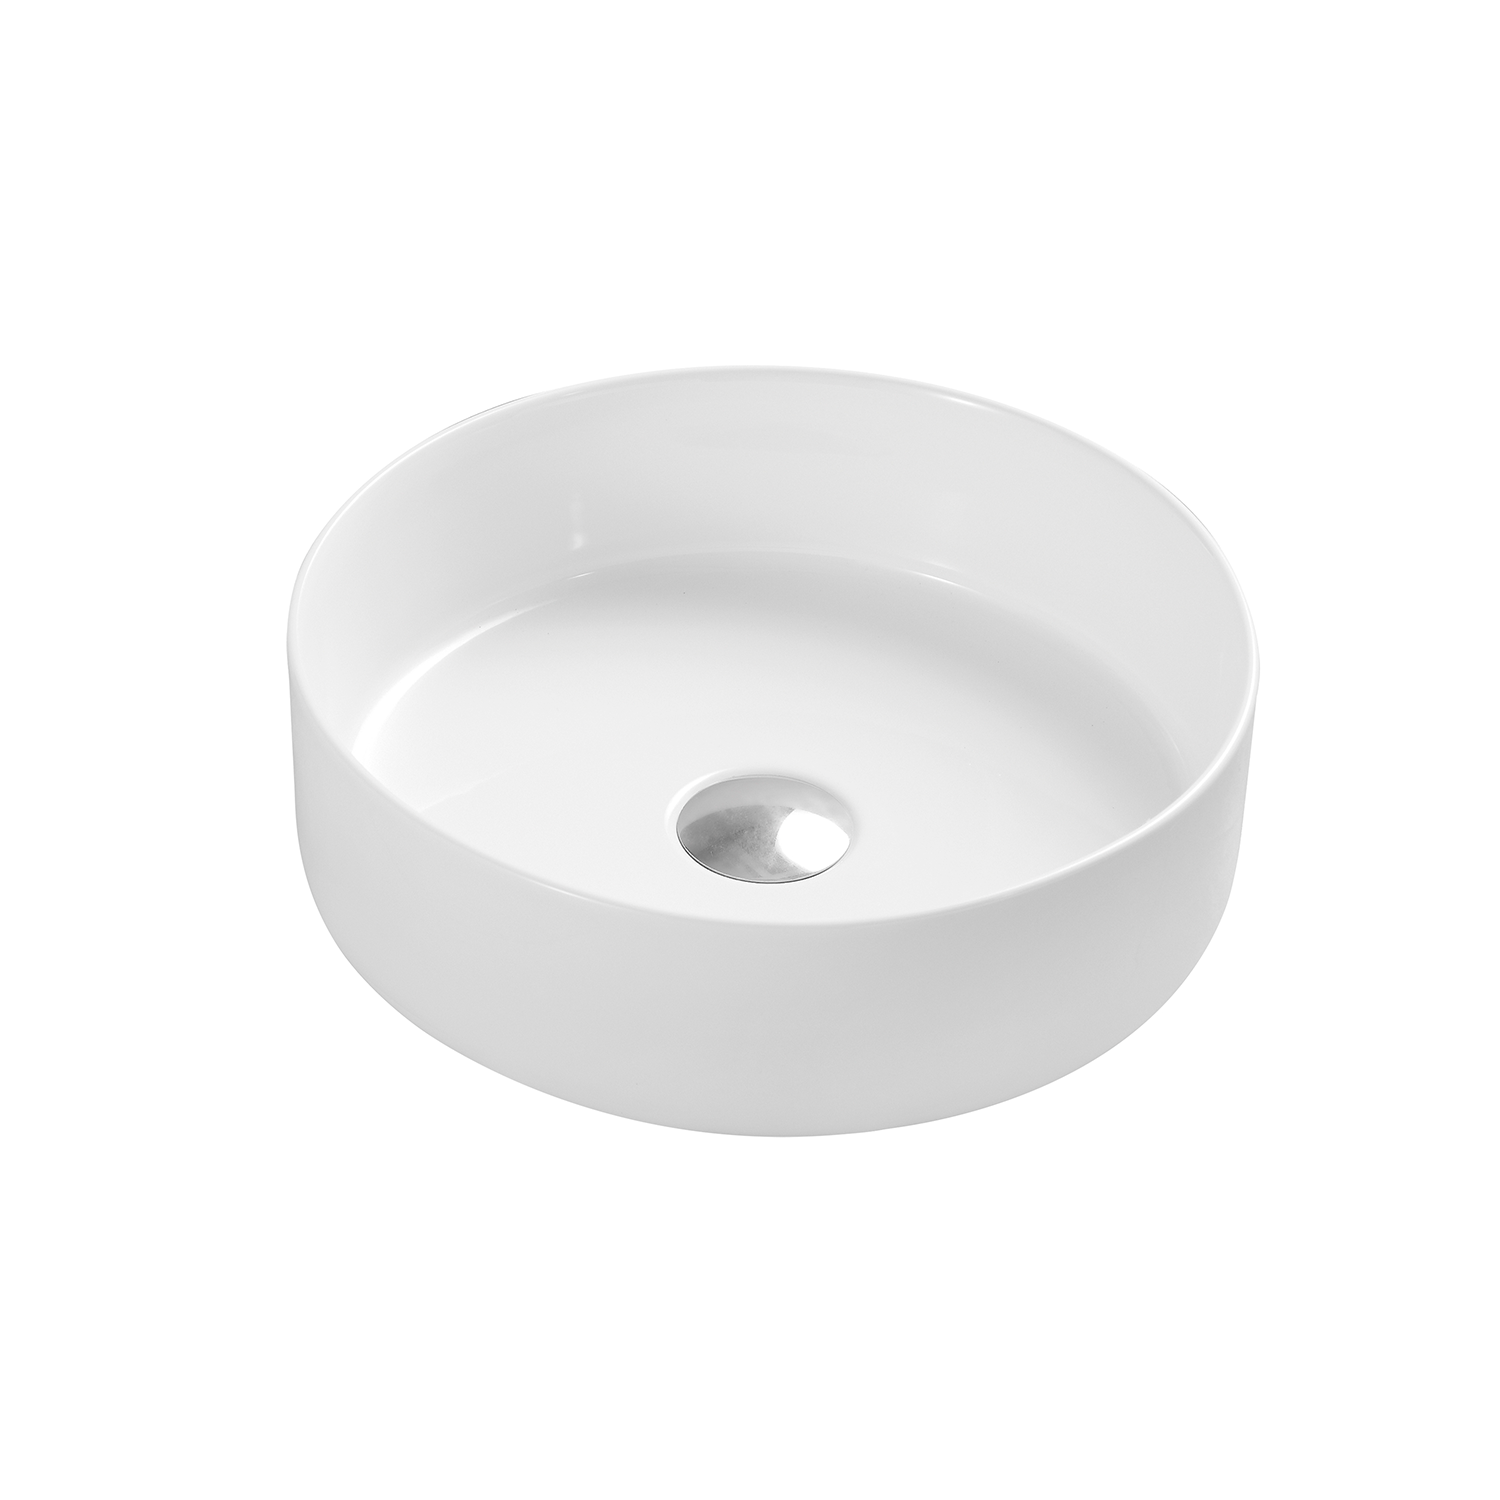 DAX  Ceramic Round Bathroom Vessel Basin - (14" Diameter) (DAX-CL1277)